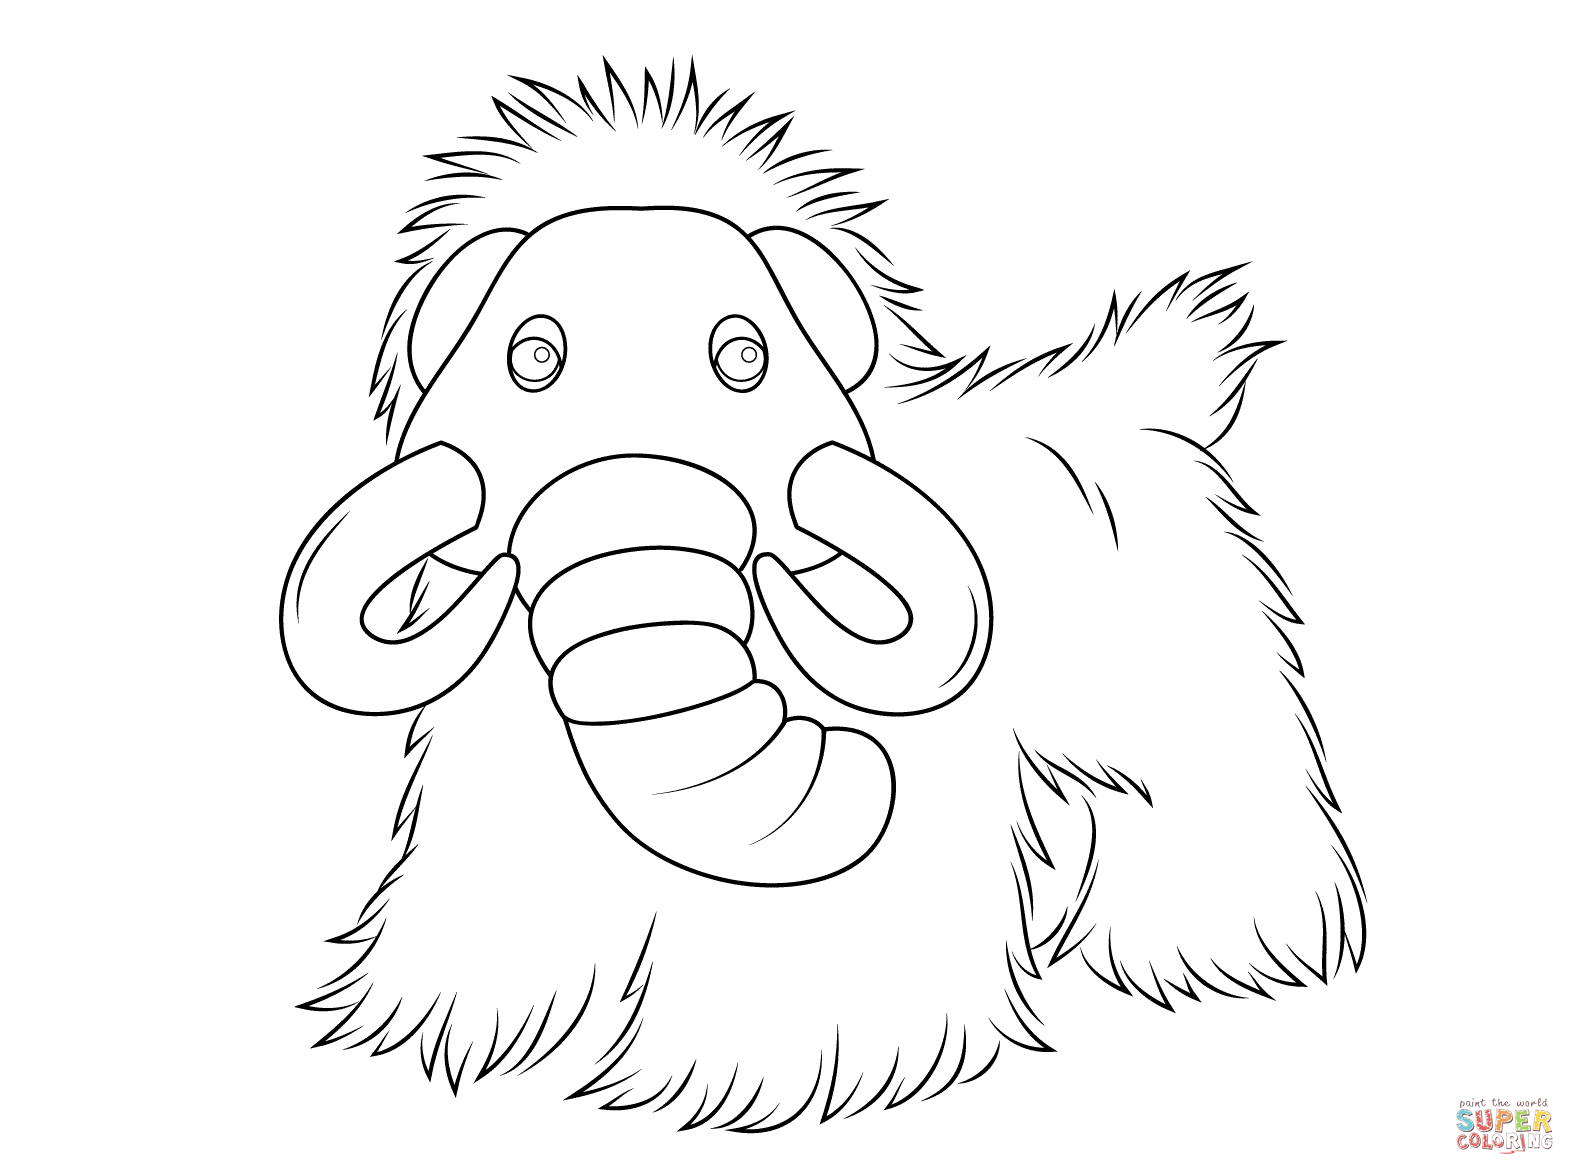 Webkinz Mammoth coloring page